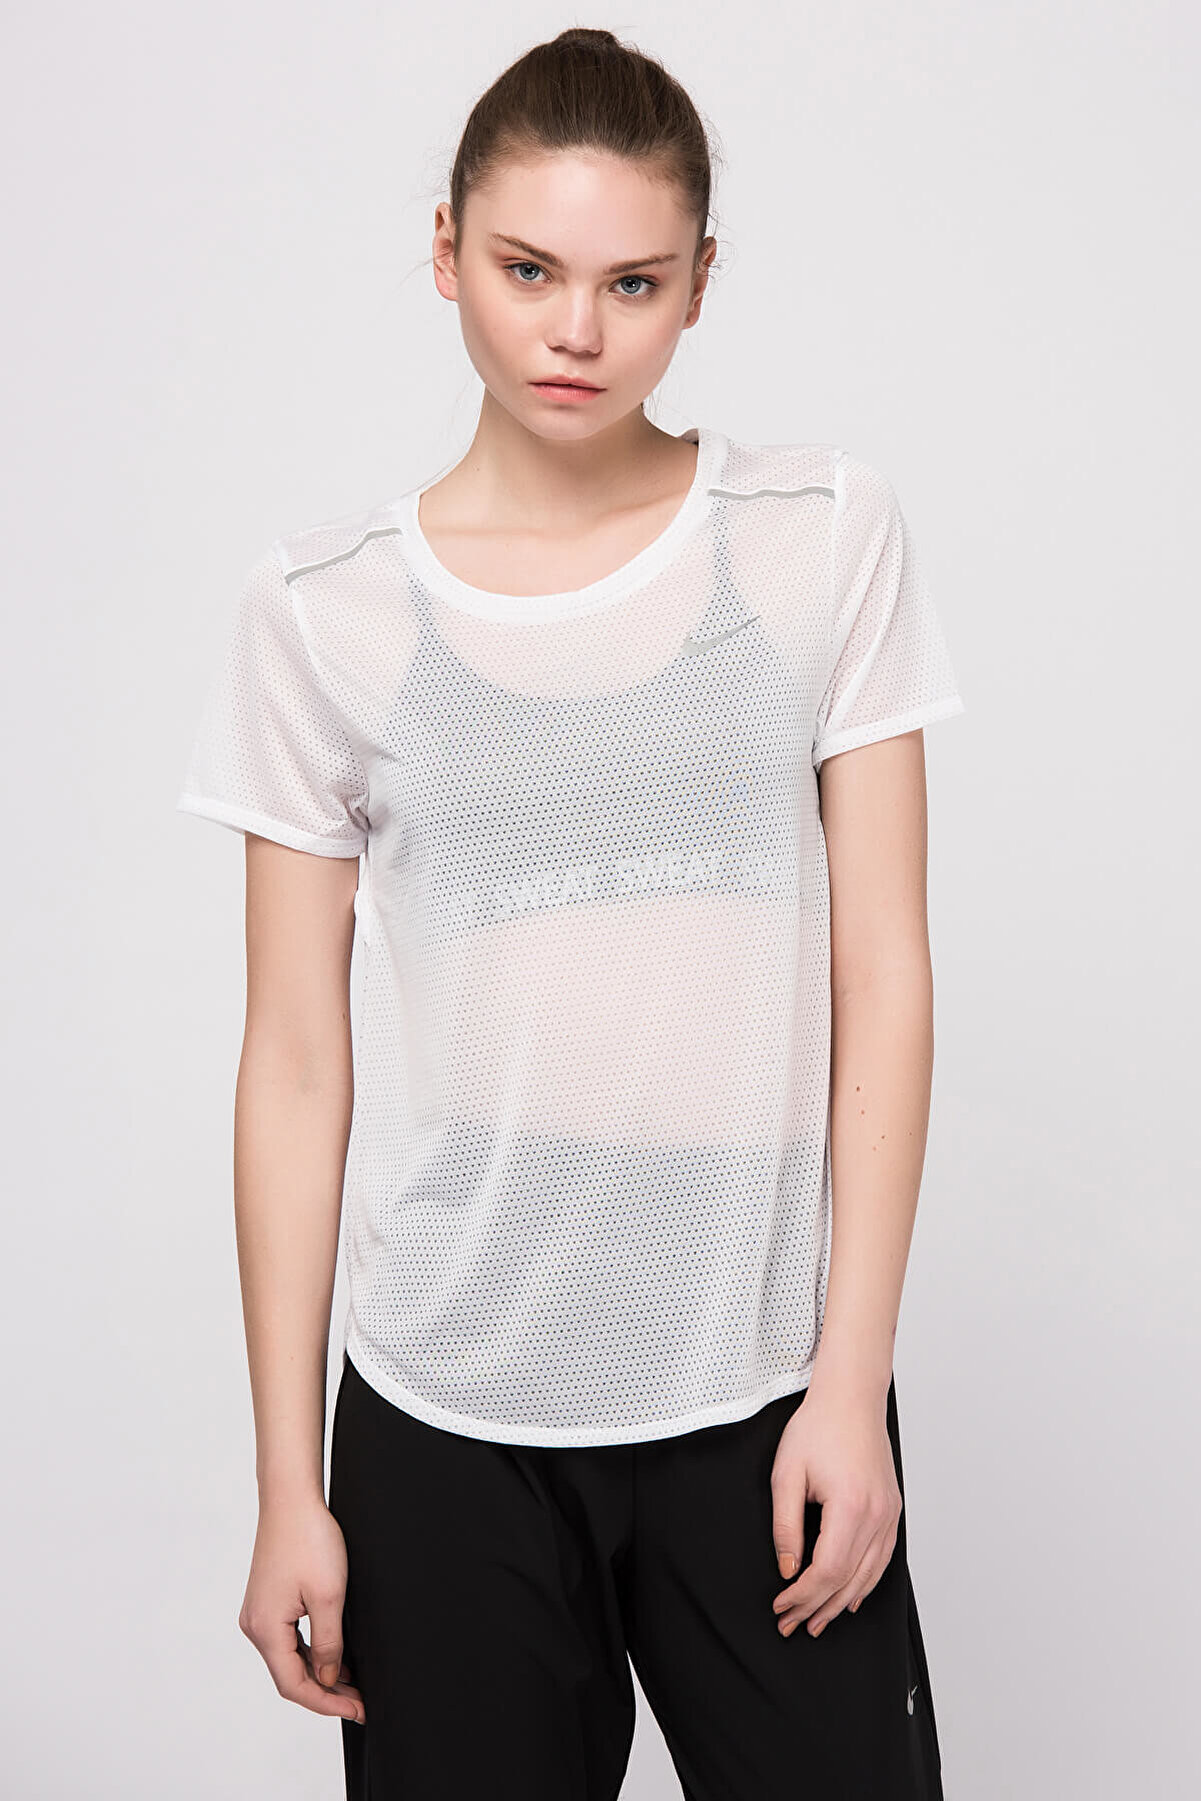 Nike Kadın T-Shirt - W Nk Brthe Top Ss - 885241-100